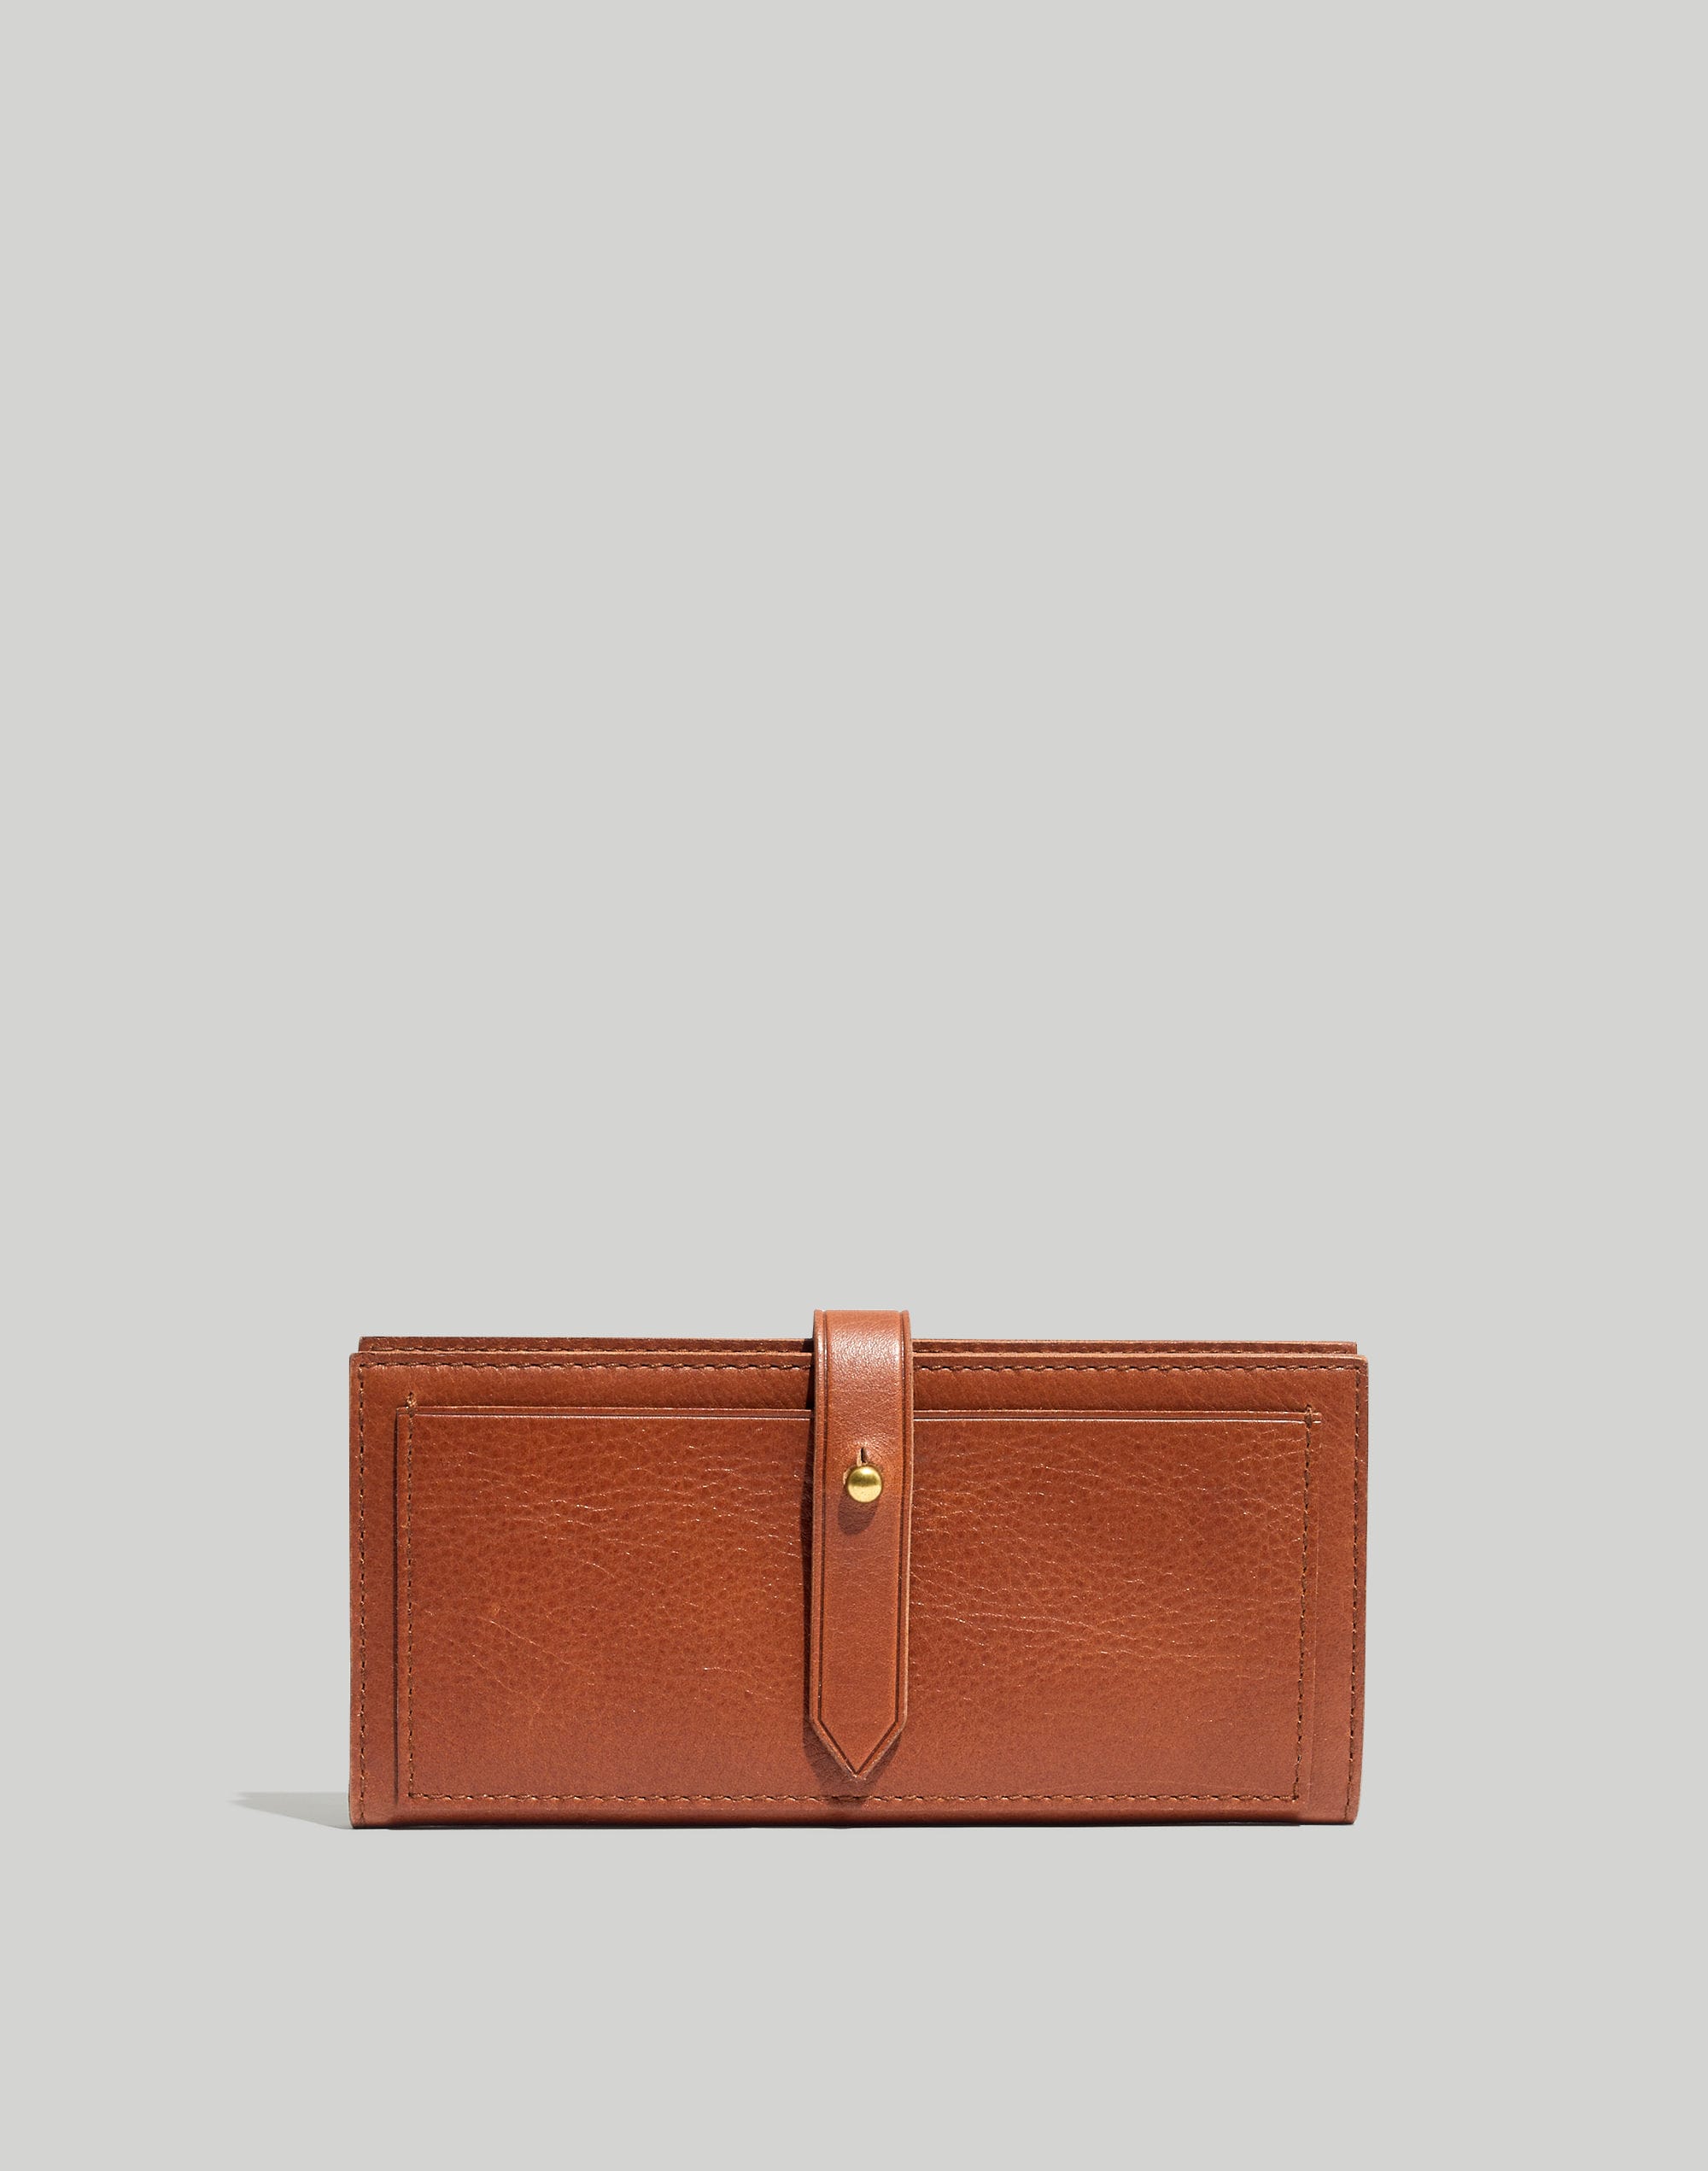 Madewell The Zip Wallet in Leather Wallet Handbags True Black : One Size